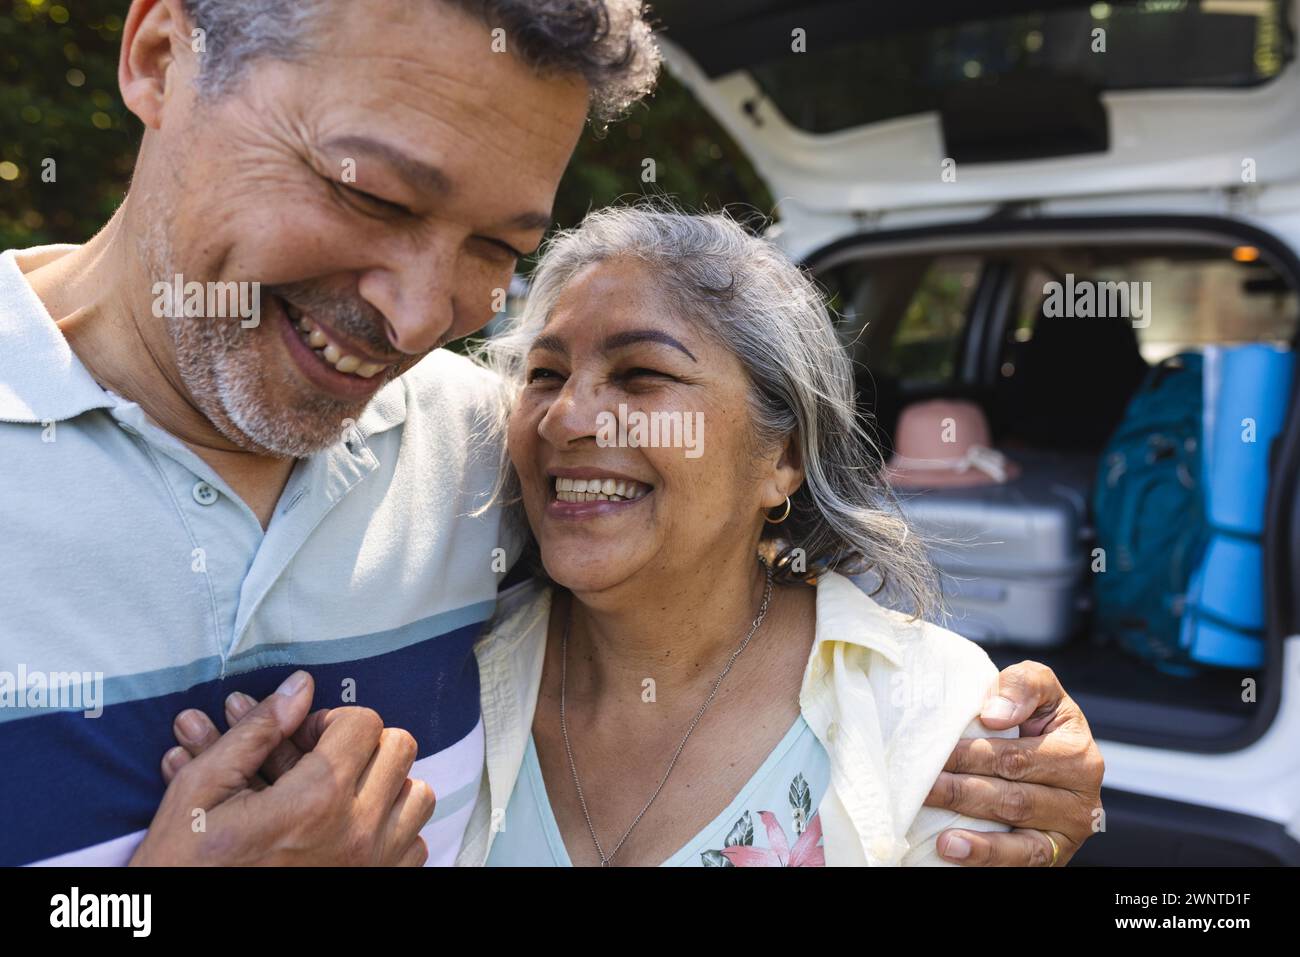 Senior biracial couple shares a joyful moment, with the man embracing the woman Stock Photo